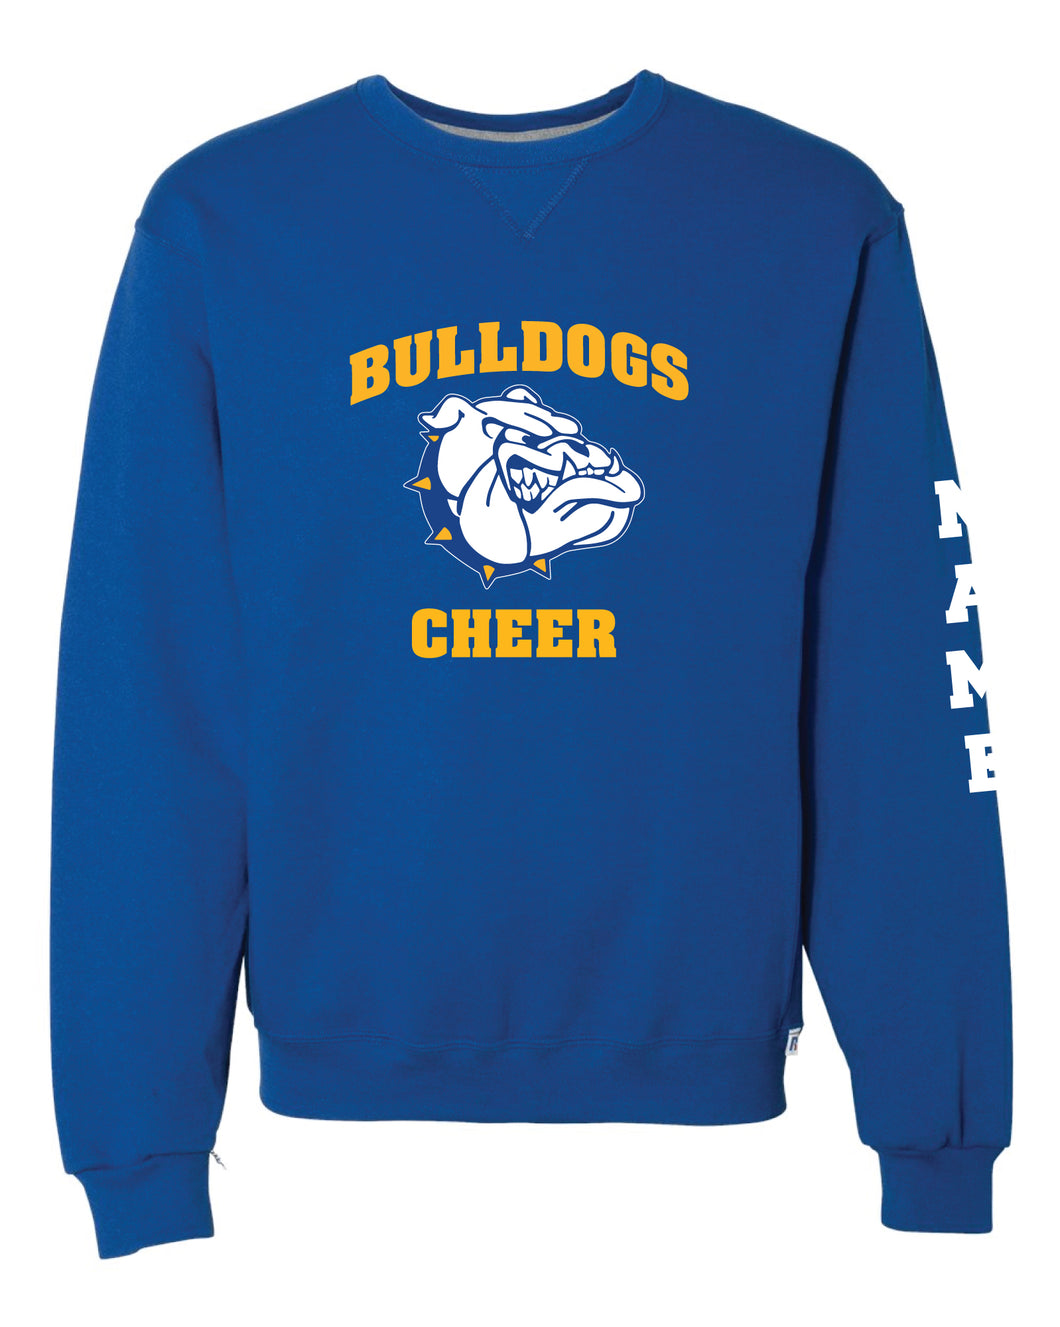 BBYC Bulldogs Cheer Russell Athletic Cotton Crewneck Sweatshirt - Royal Blue